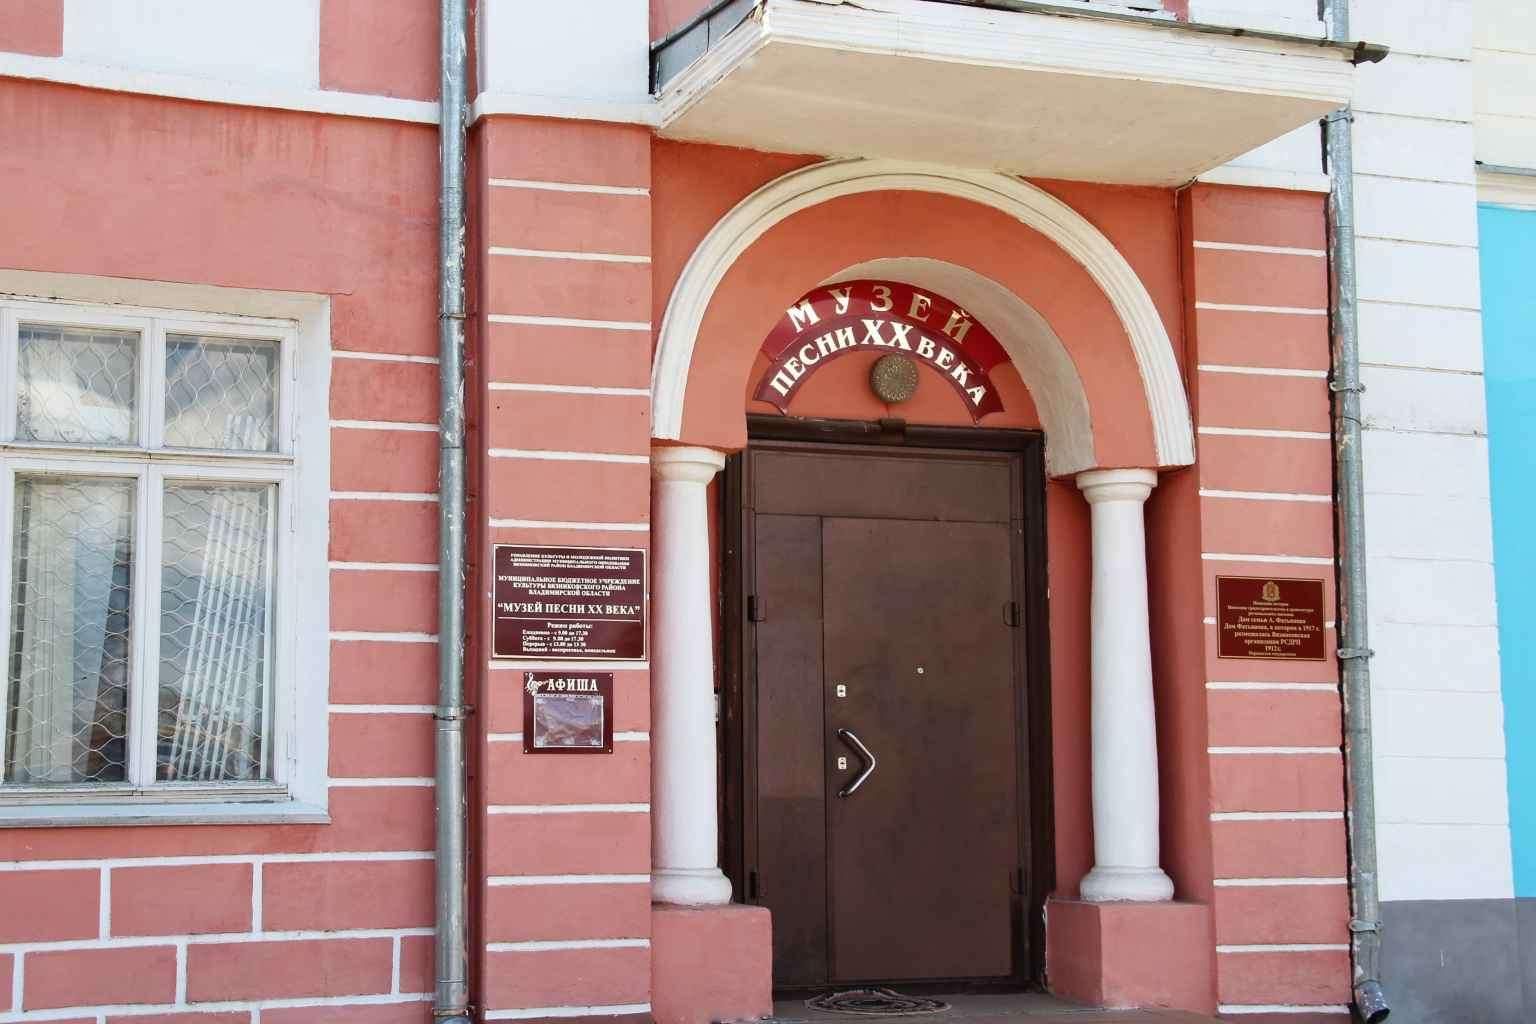 Музей песни вязники